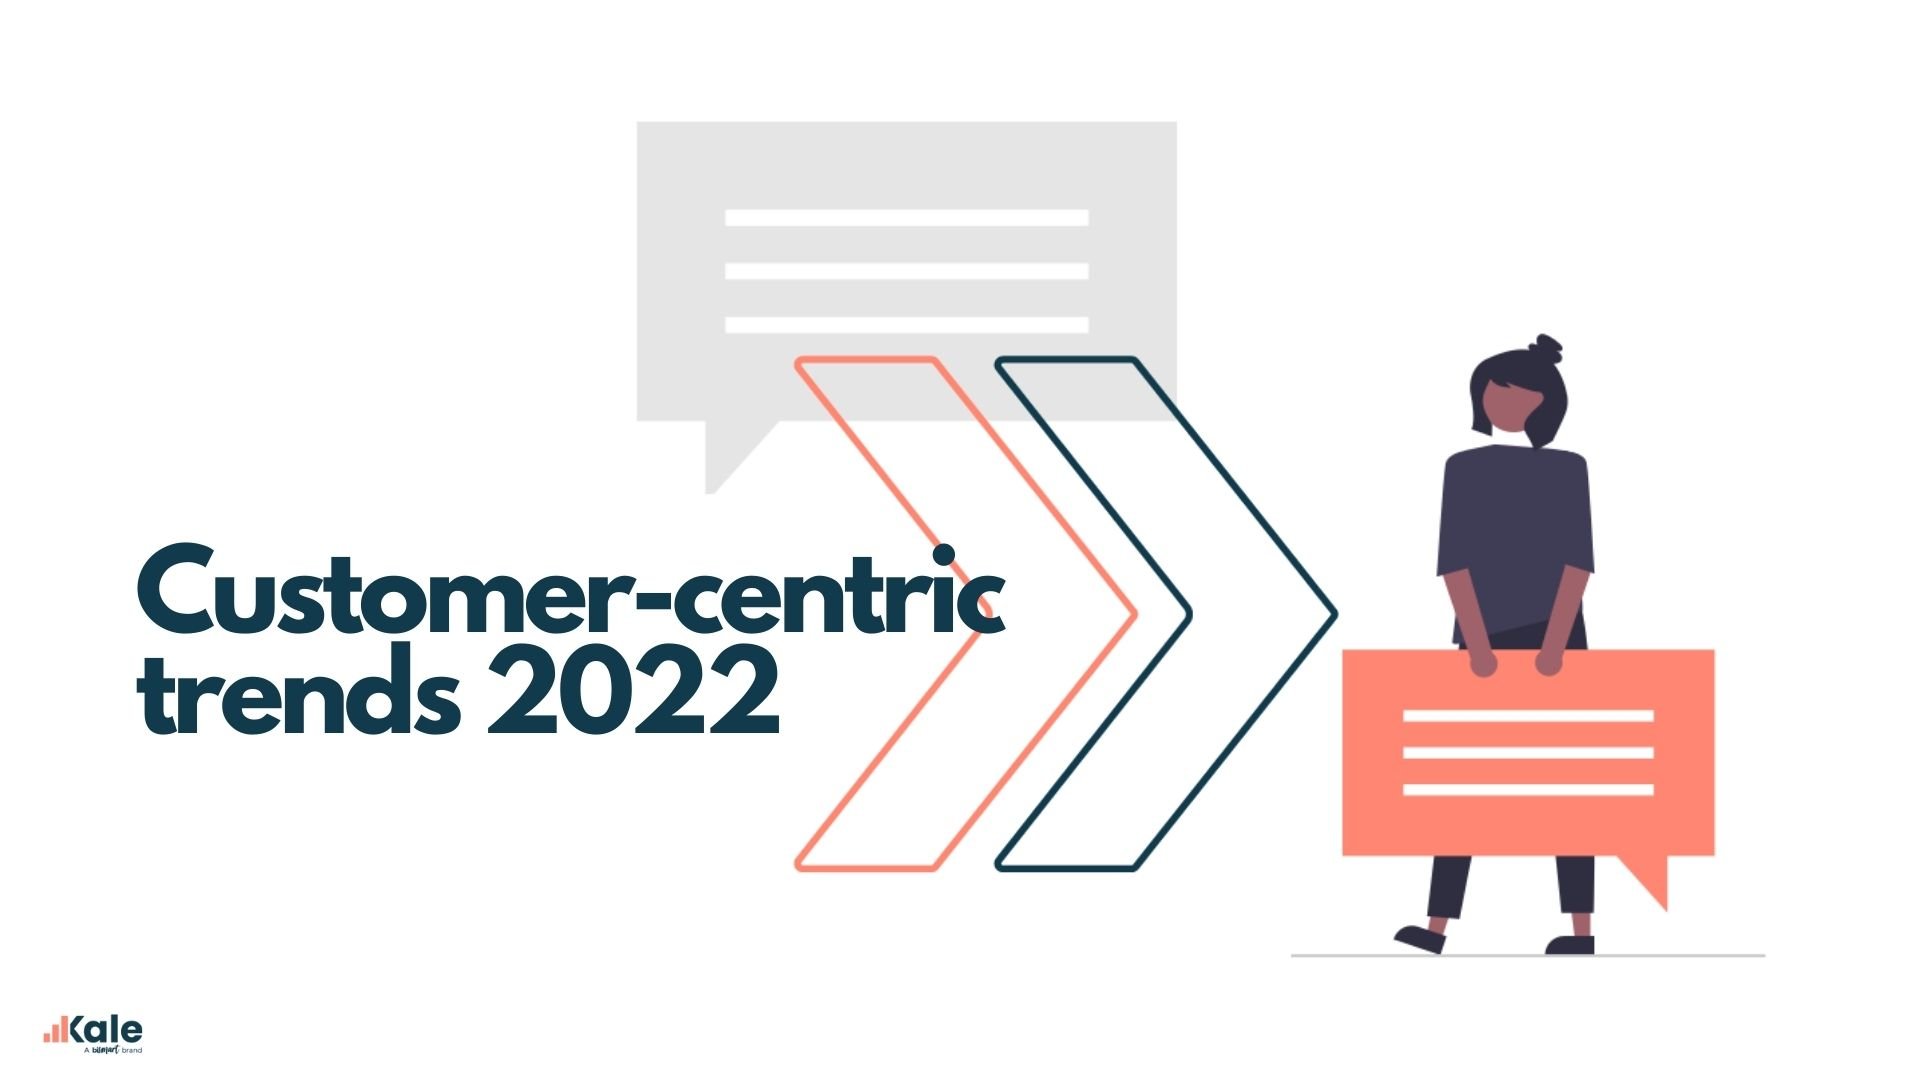 Customer-centric trends 2022 empresas insights